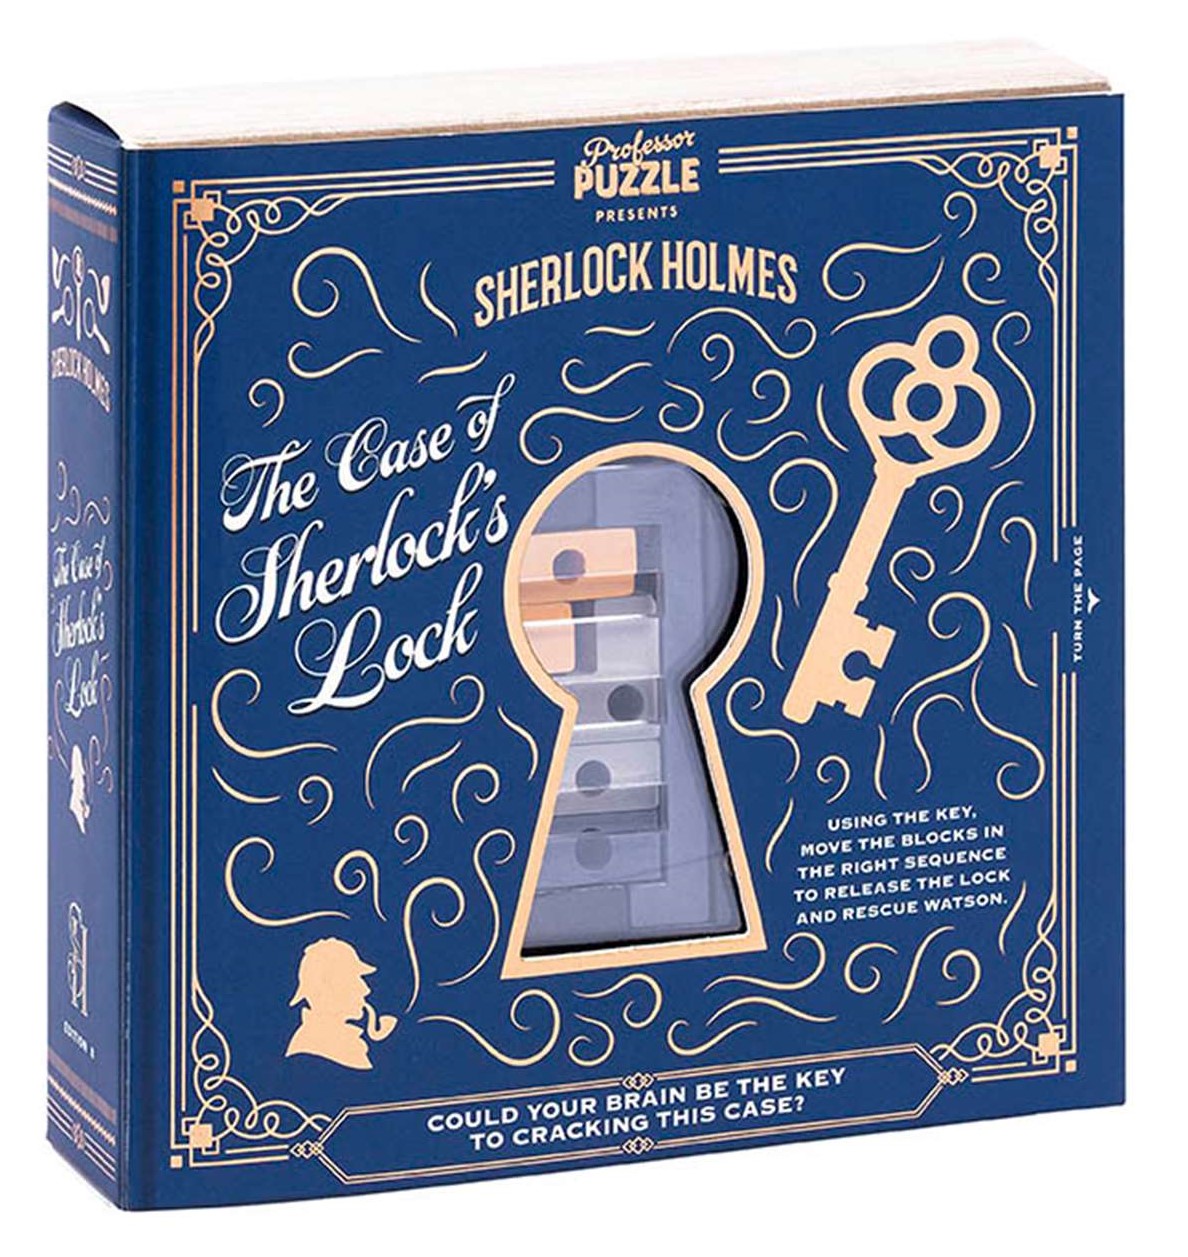 Puzzle mecanic - The Case of the Sherlock's Lock | Professor Puzzle